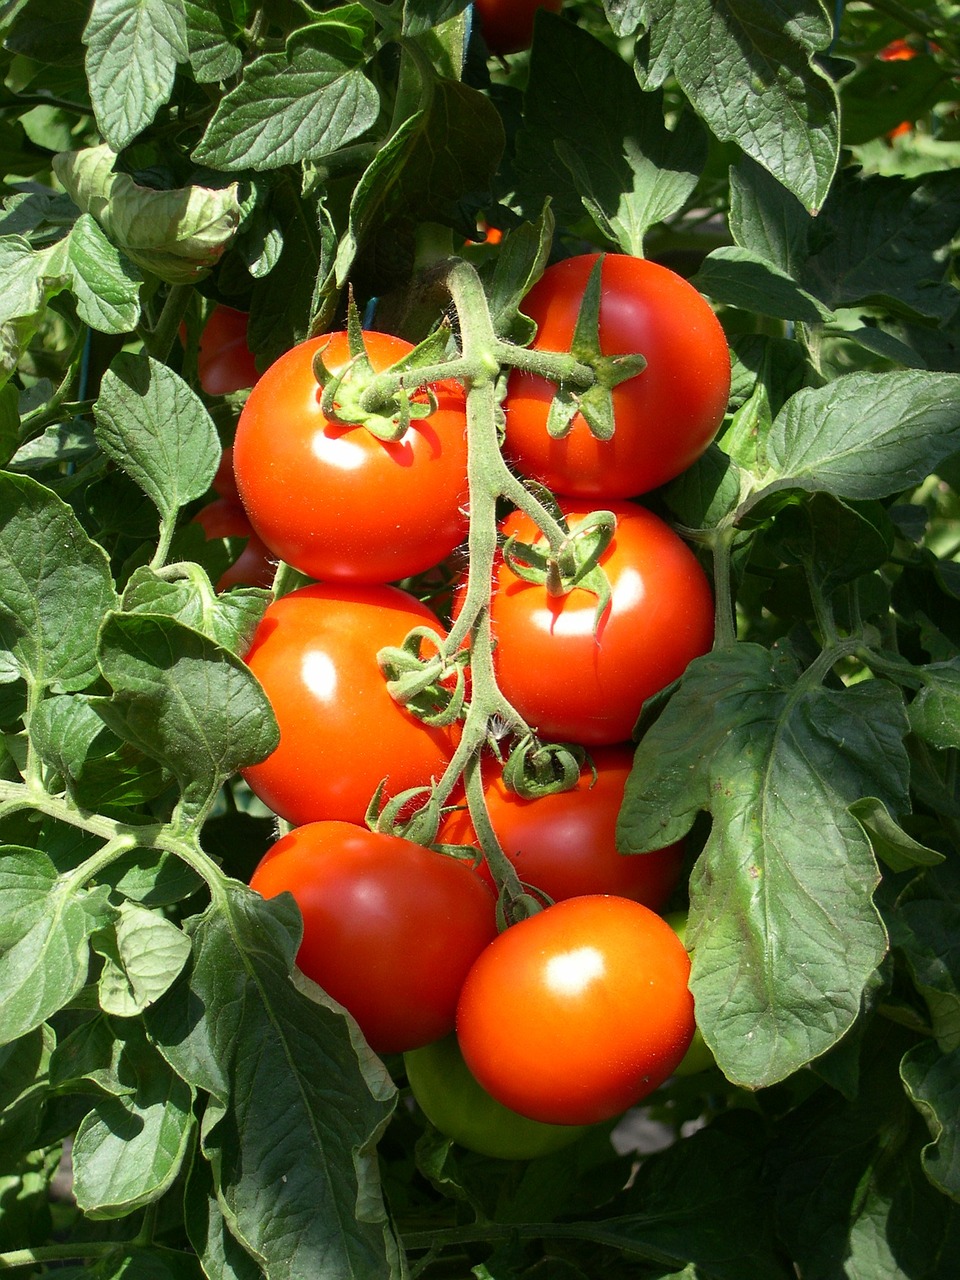 bush tomatoes tomatoes red free photo